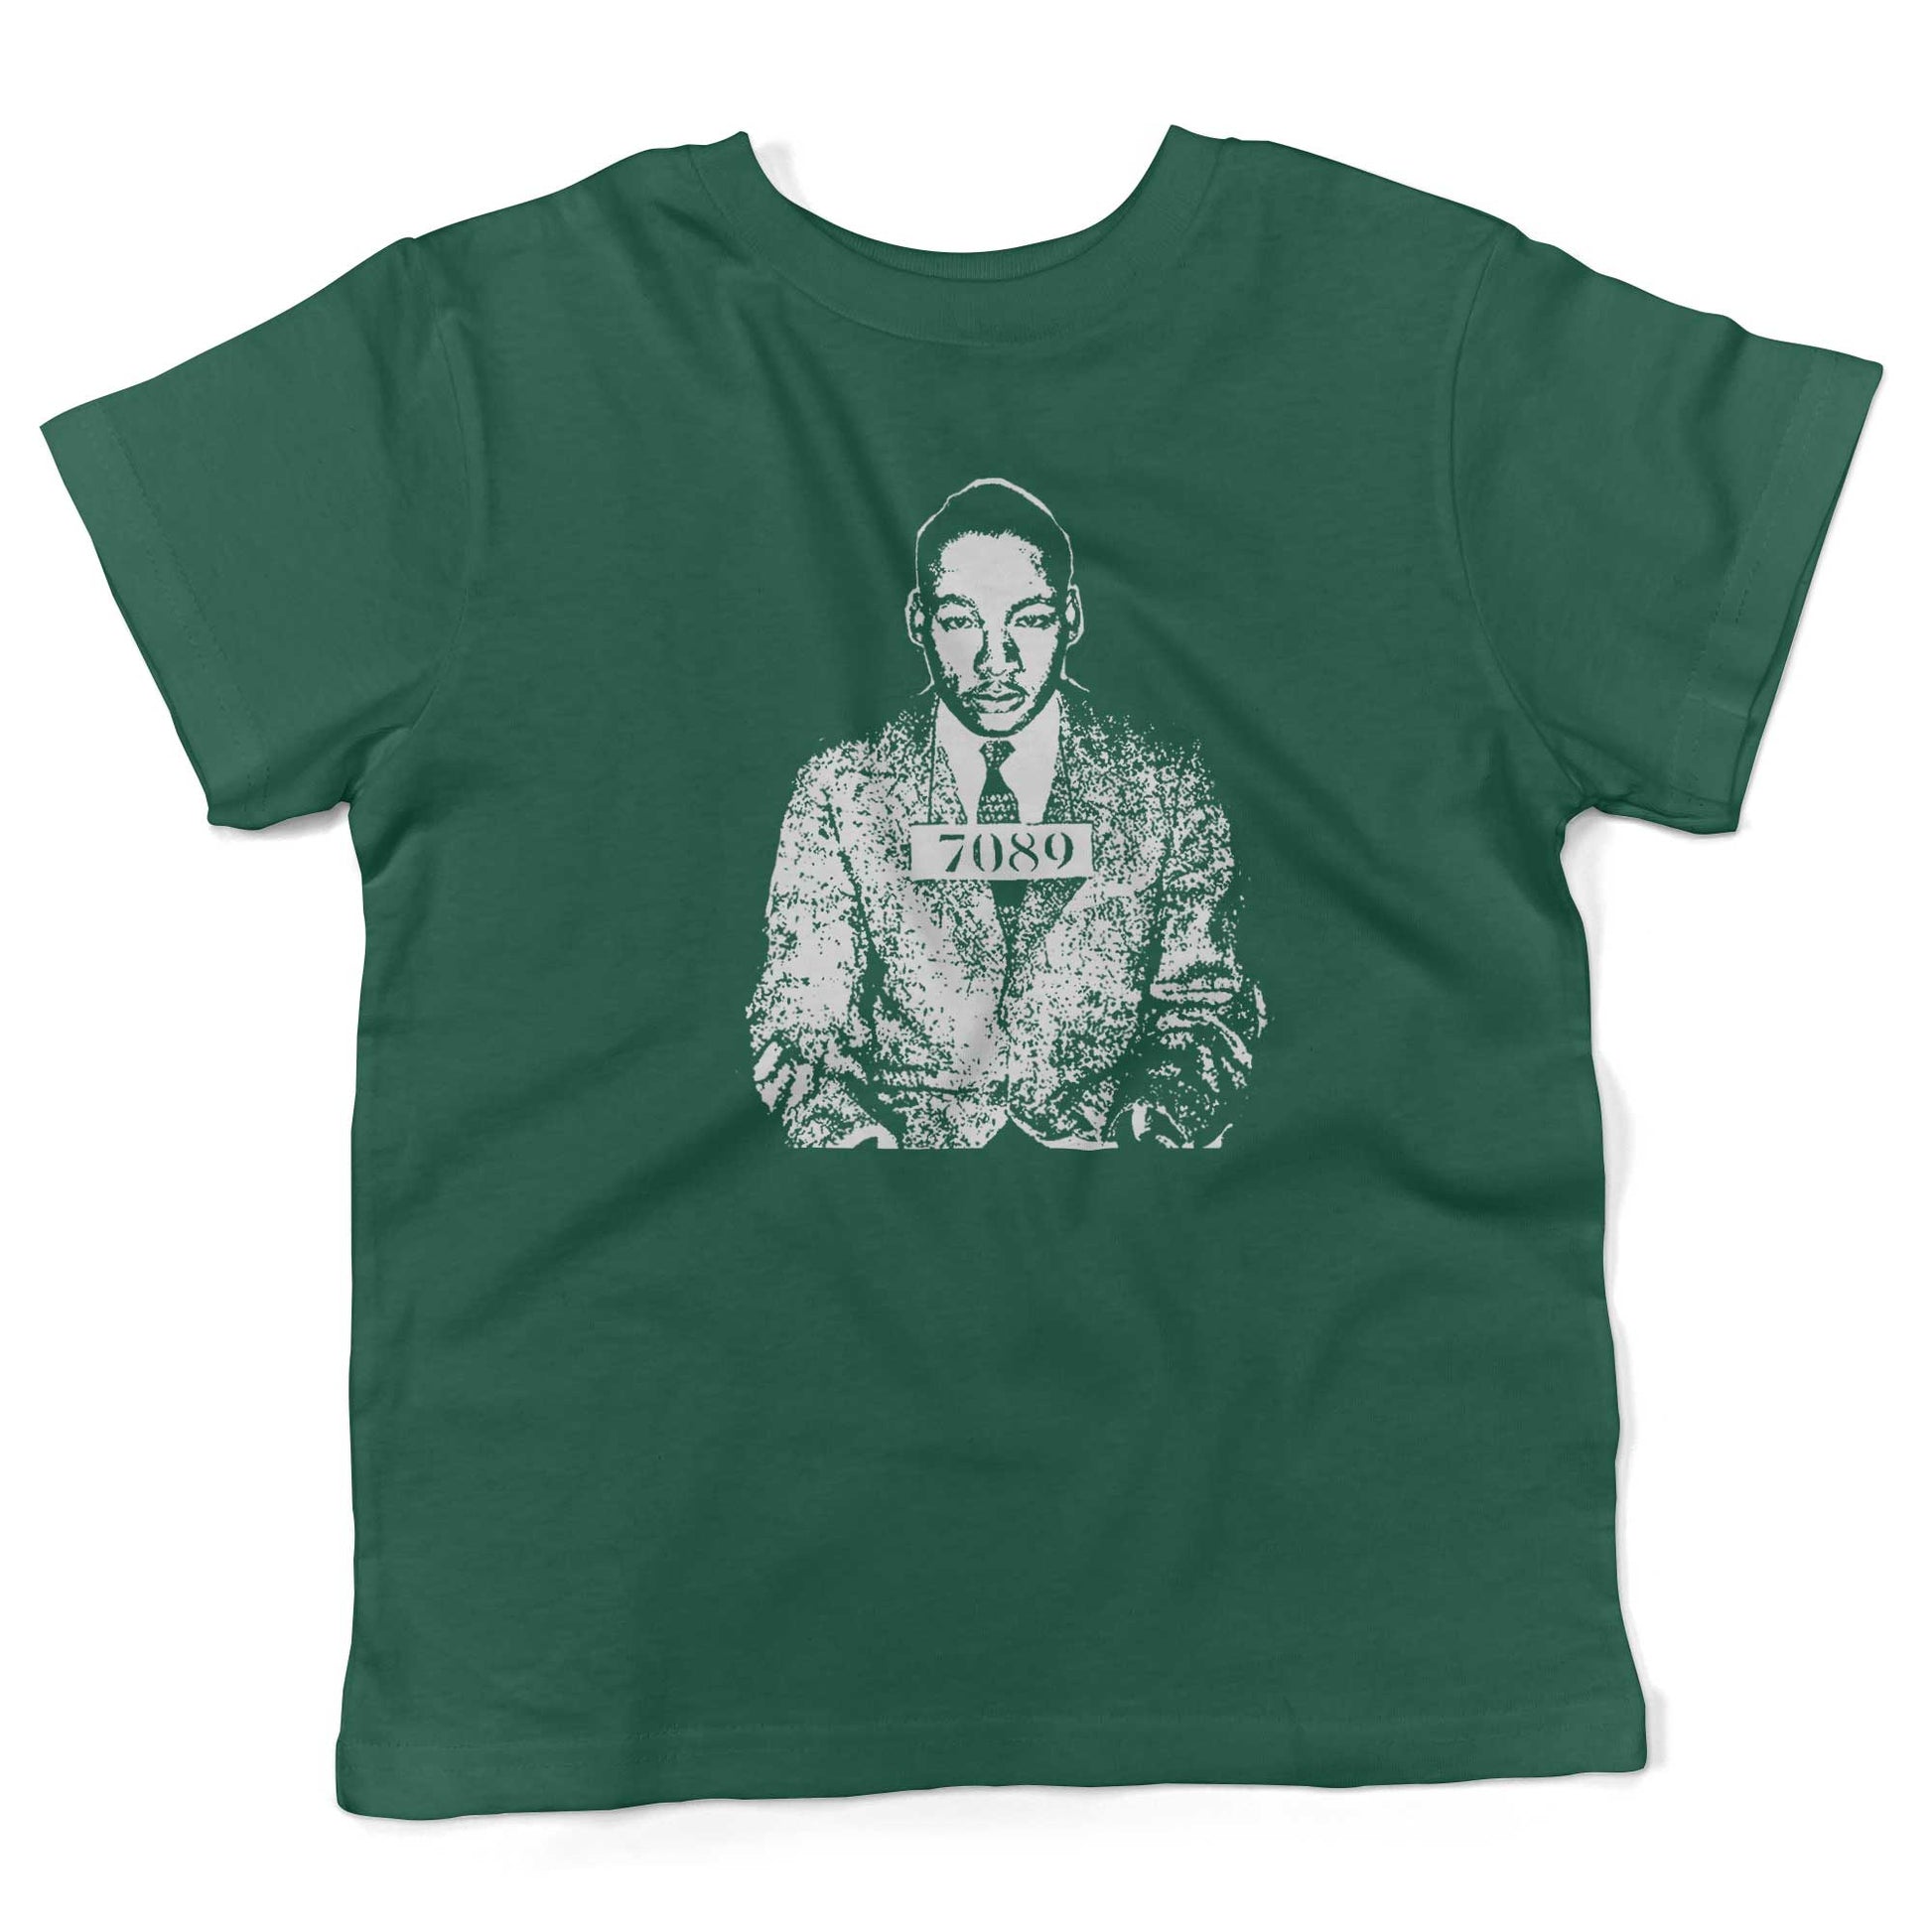 Martin Luther King Jr. Toddler Shirt-Kelly Green-2T